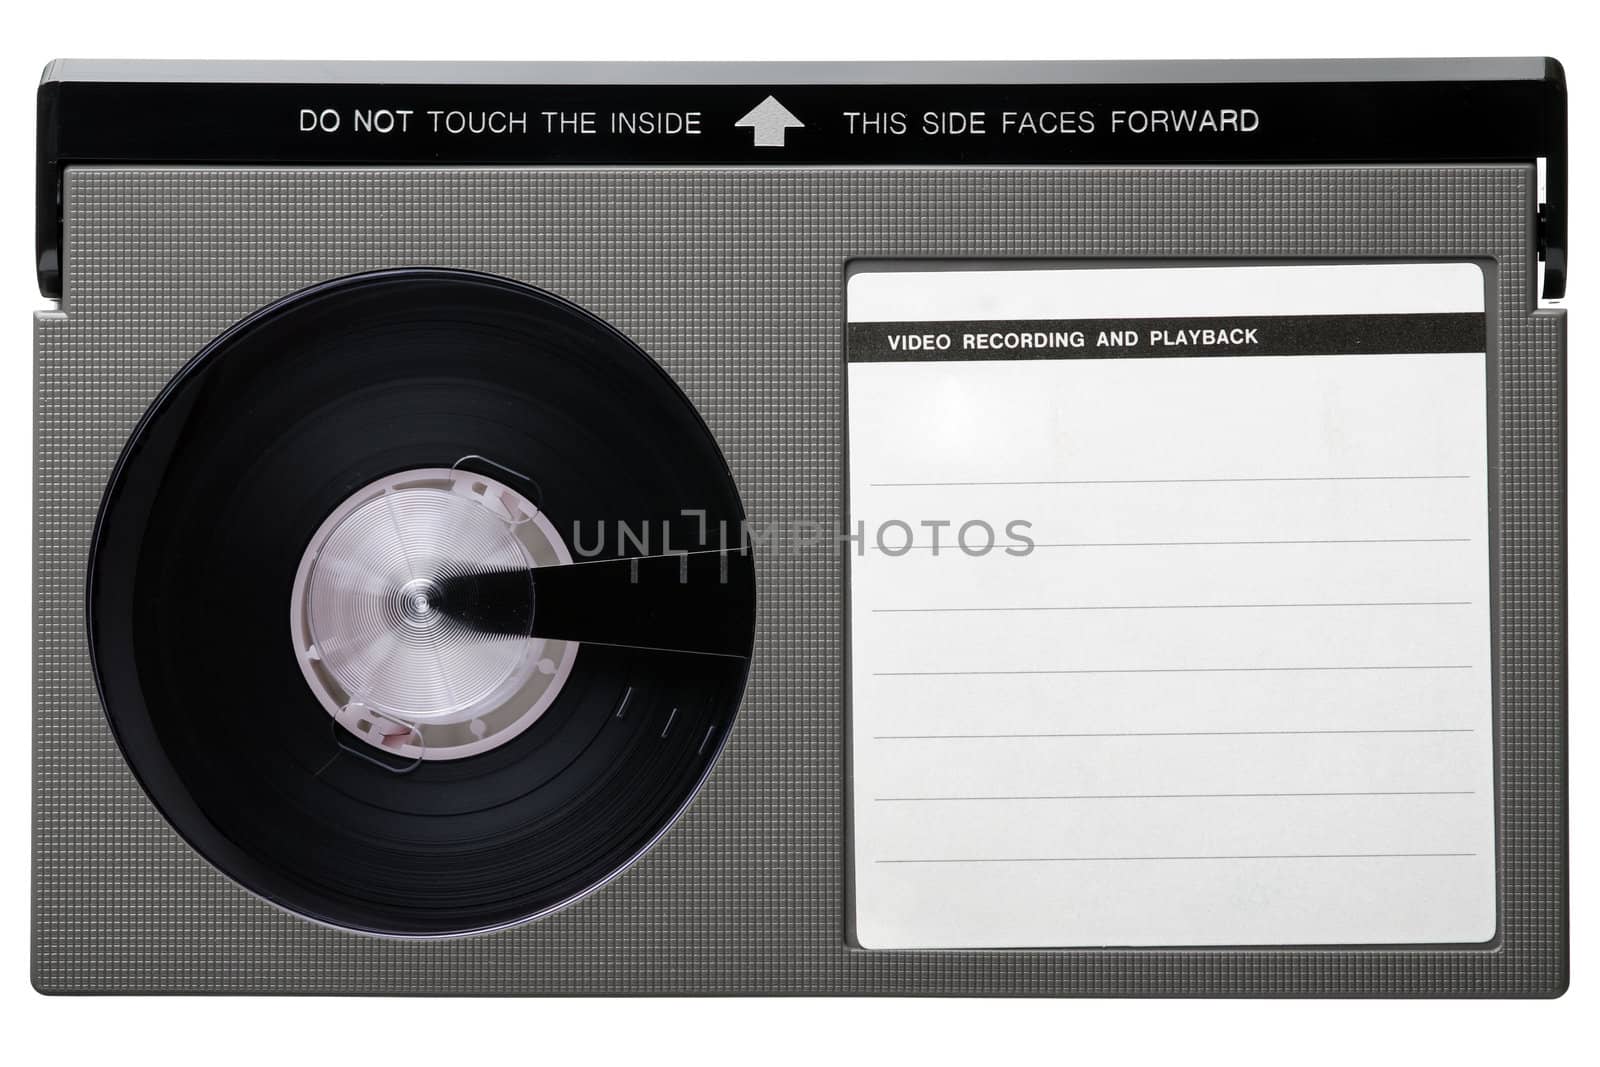 Retro Video Casette. Beta Tape, the competitor of VHS.